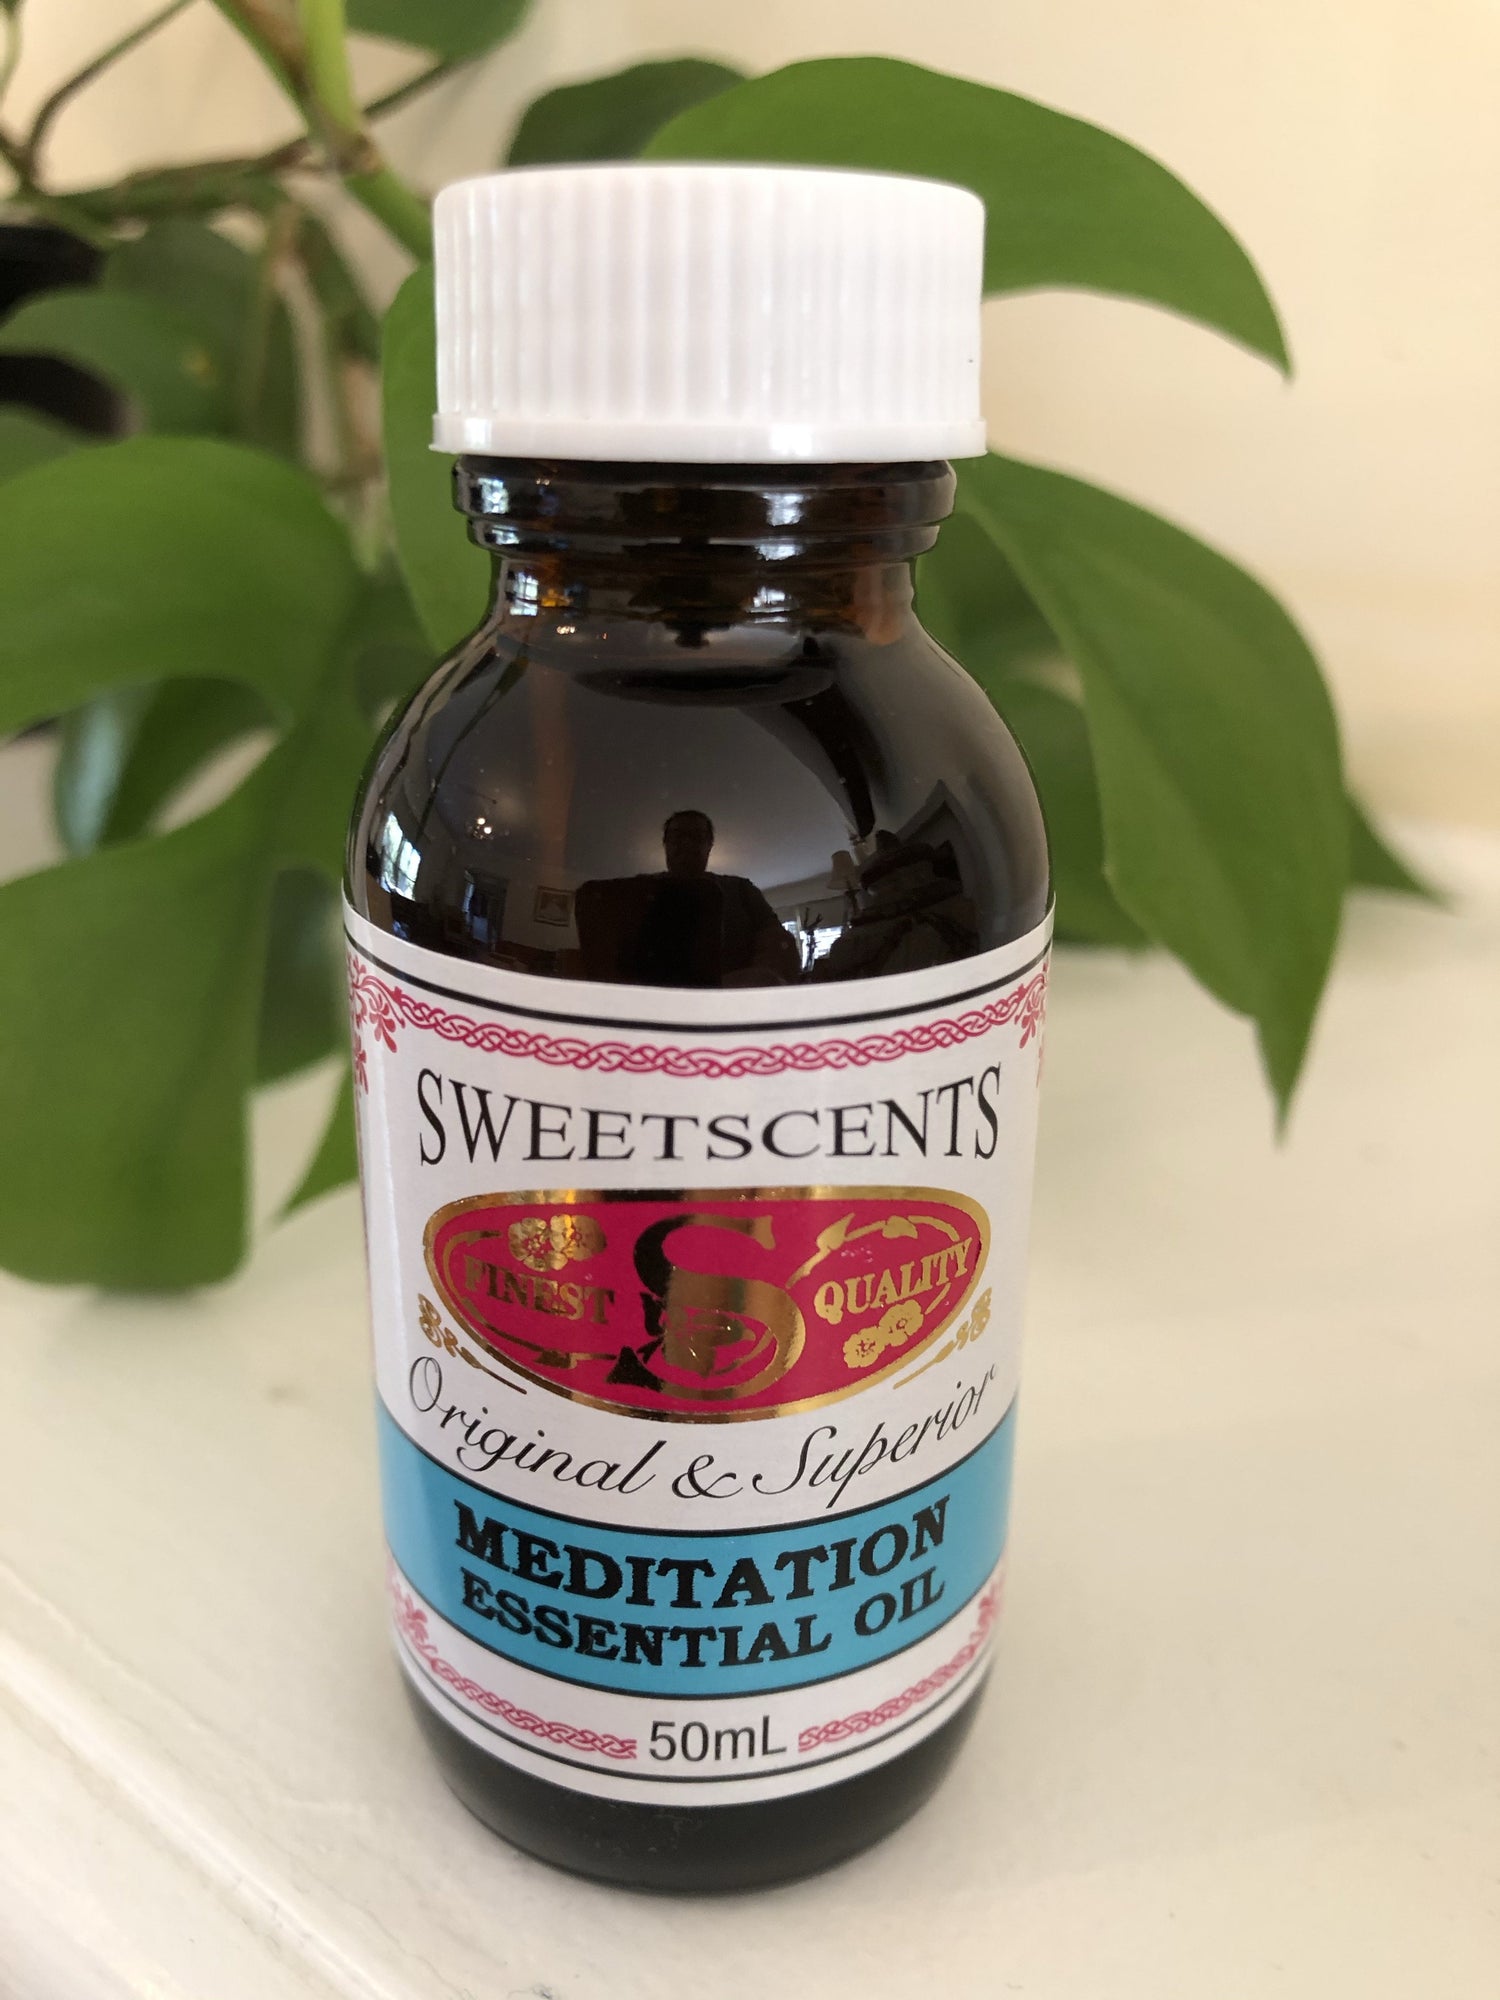 🧘‍♀️ Meditation Sweetscents Essential Oil 50ml - JohnnyBoyAus